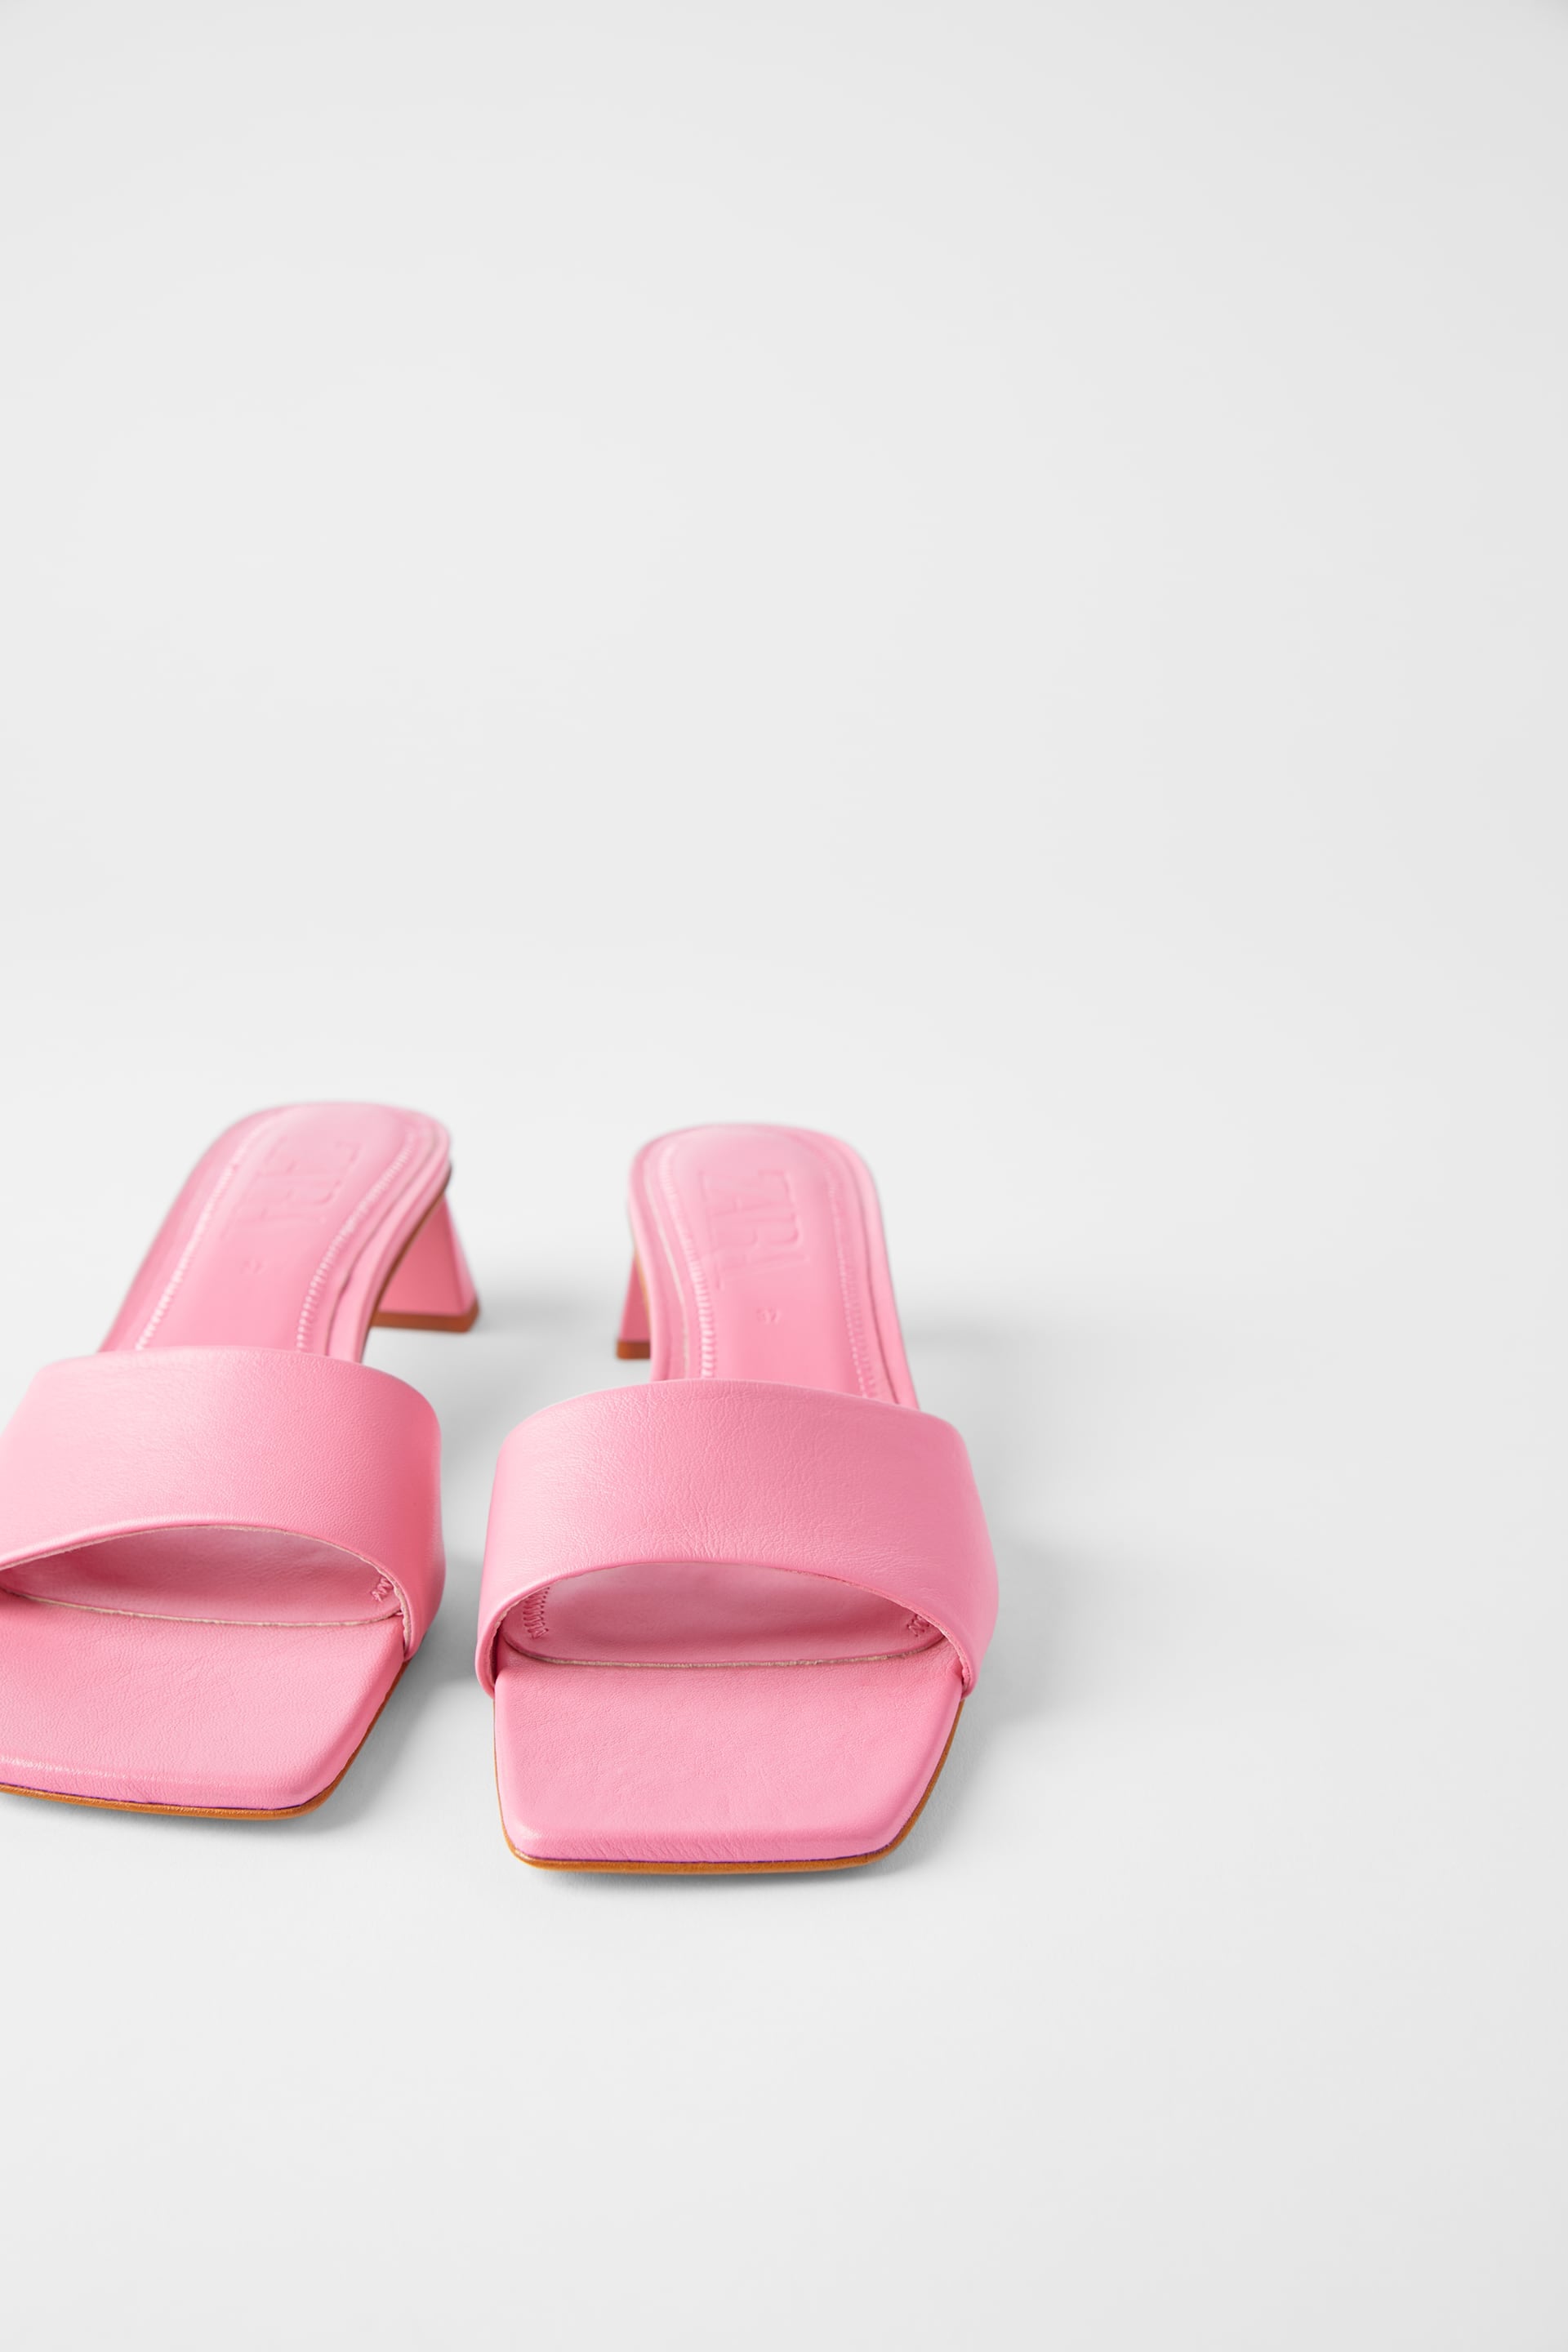 Zara Heels | Square-Toe Heels Are Fall 